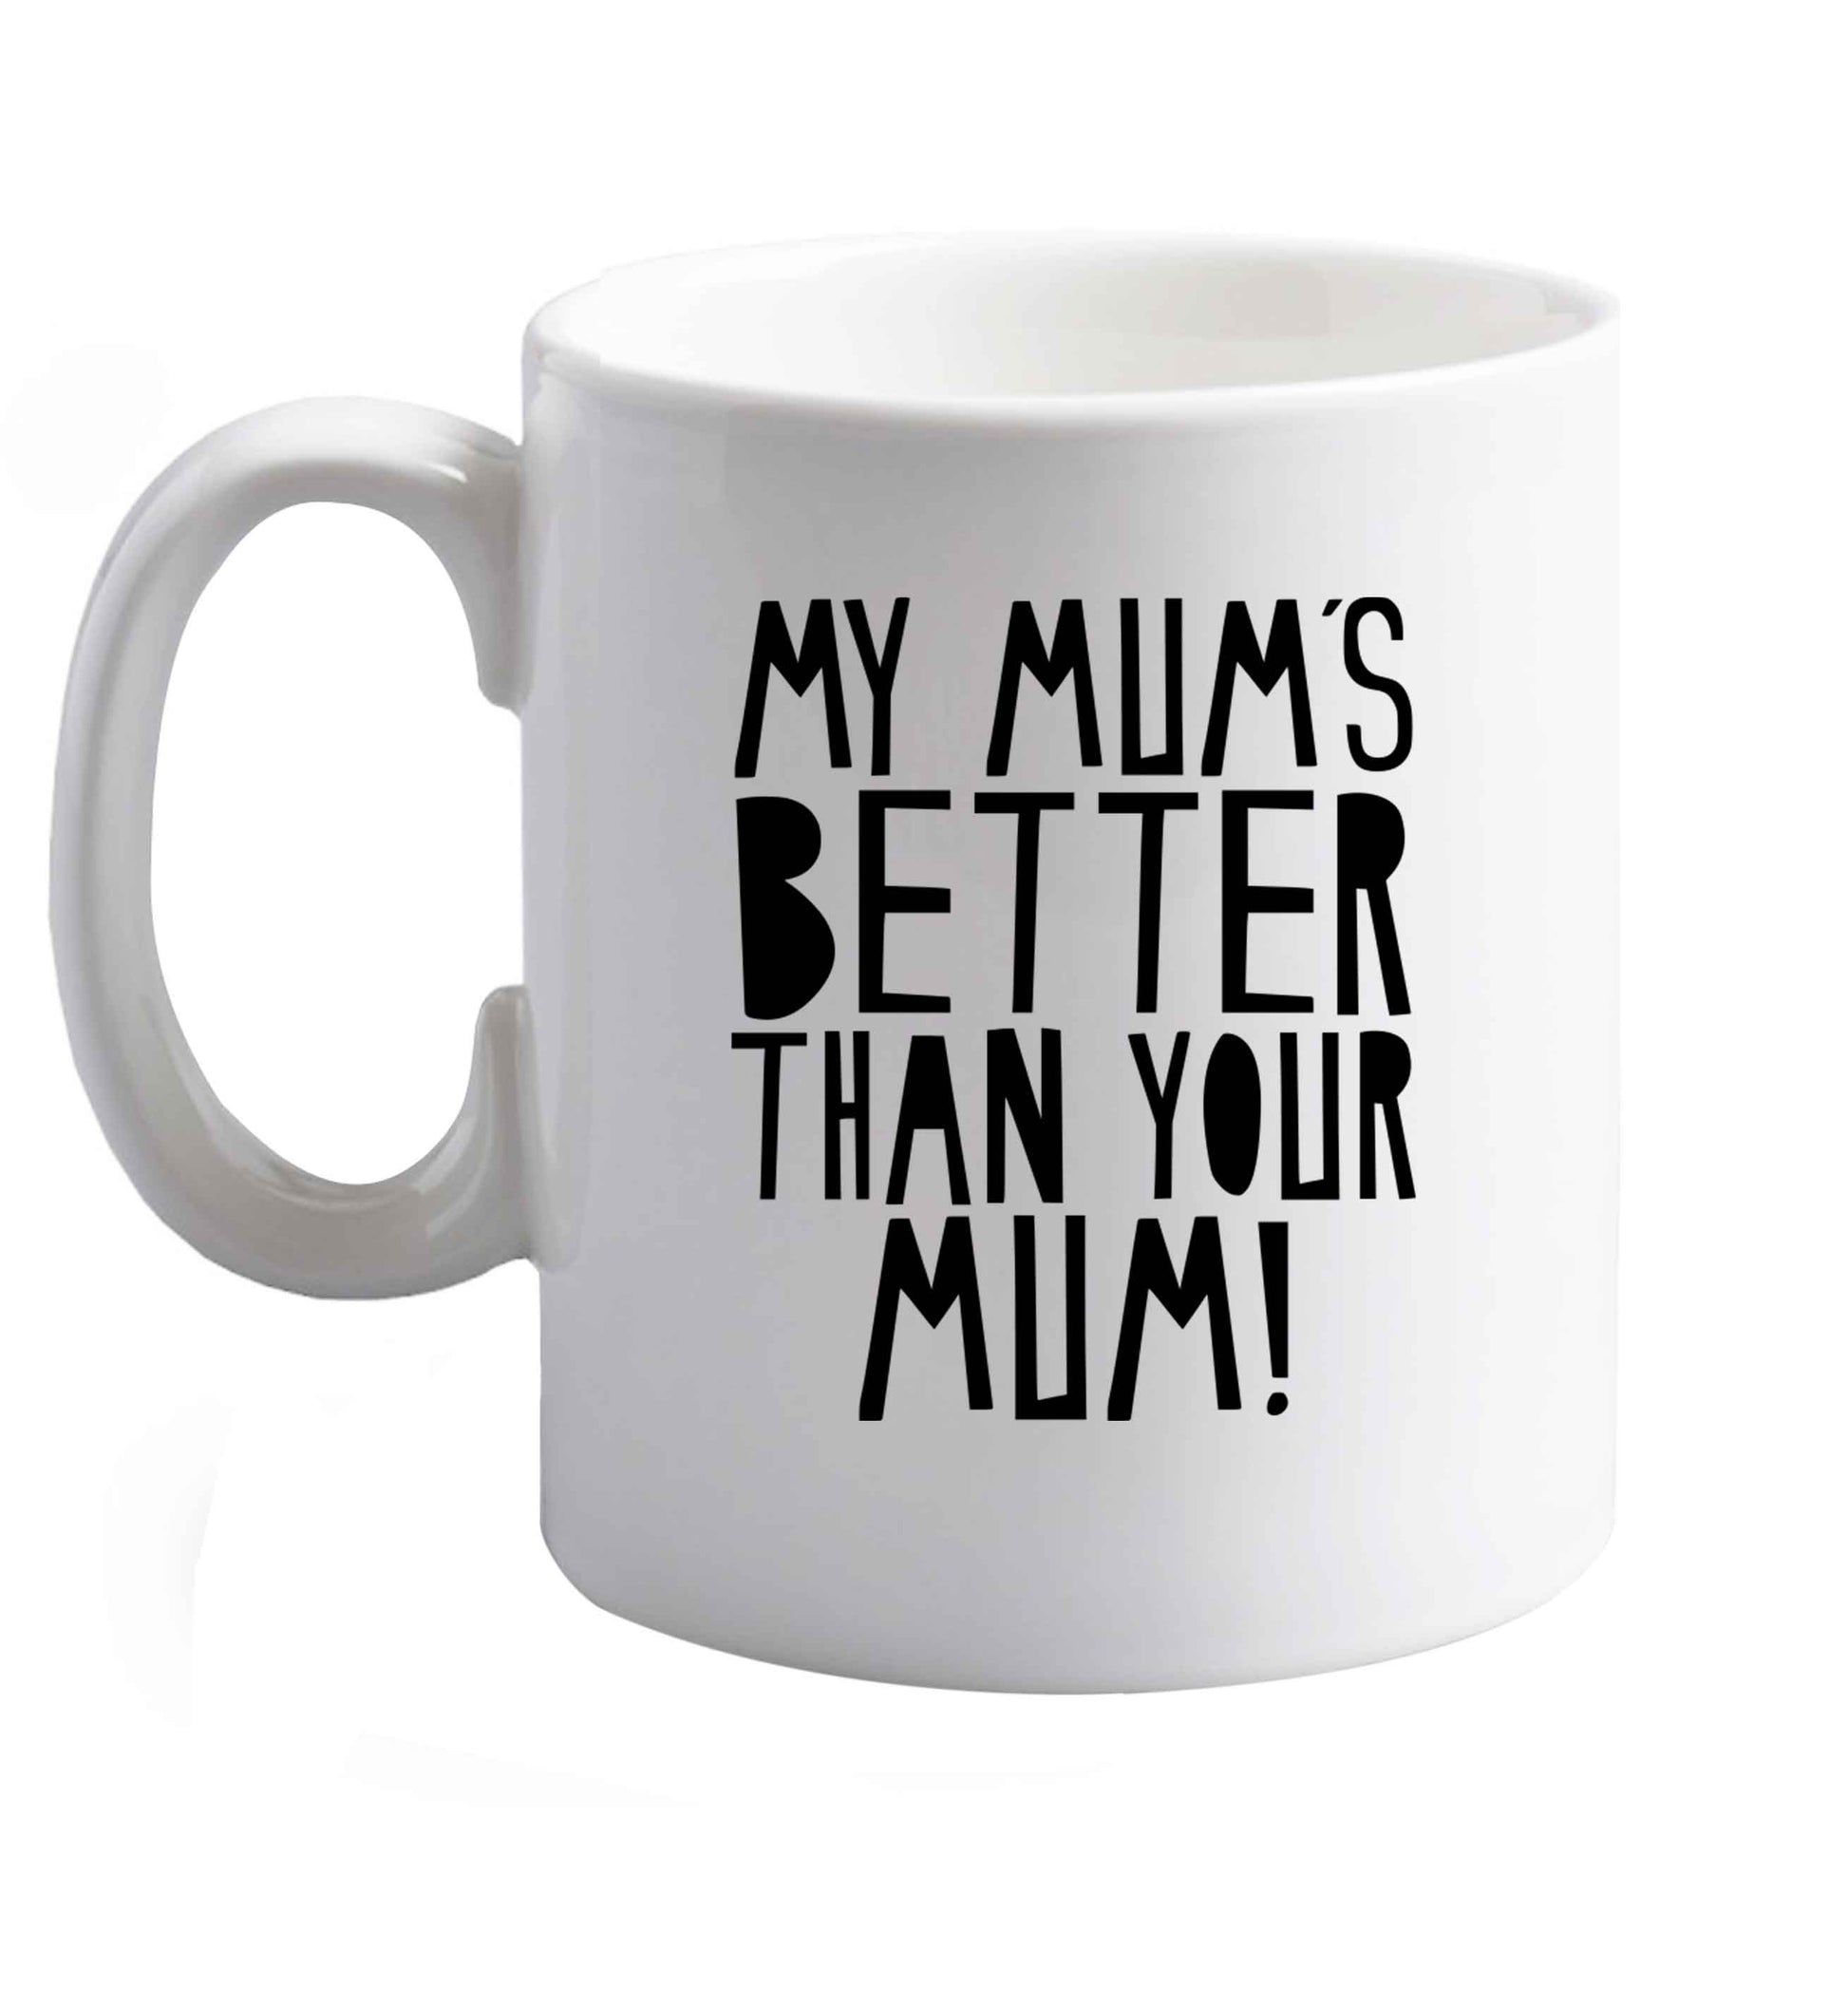 10 oz My mum's better than your mum ceramic mug right handed